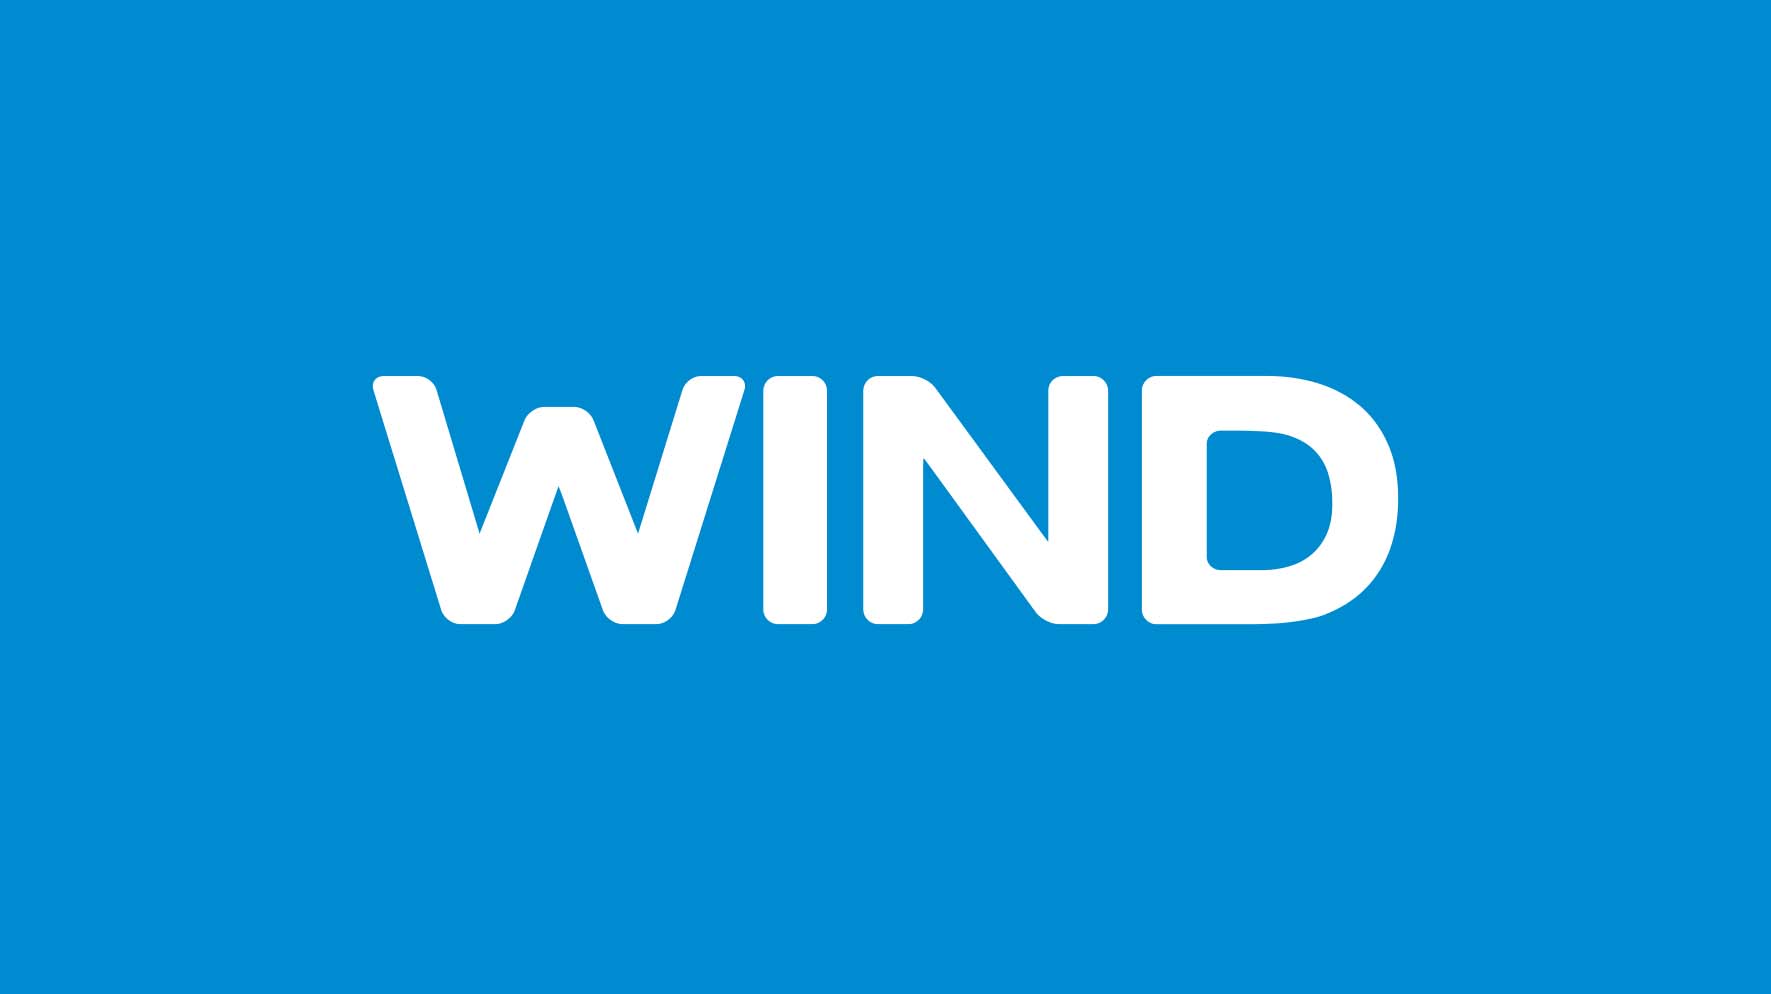 WIND: Νέα προγράμματα επικοινωνίας με απεριόριστα data, ομιλία και υπερ-υψηλές ταχύτητες!